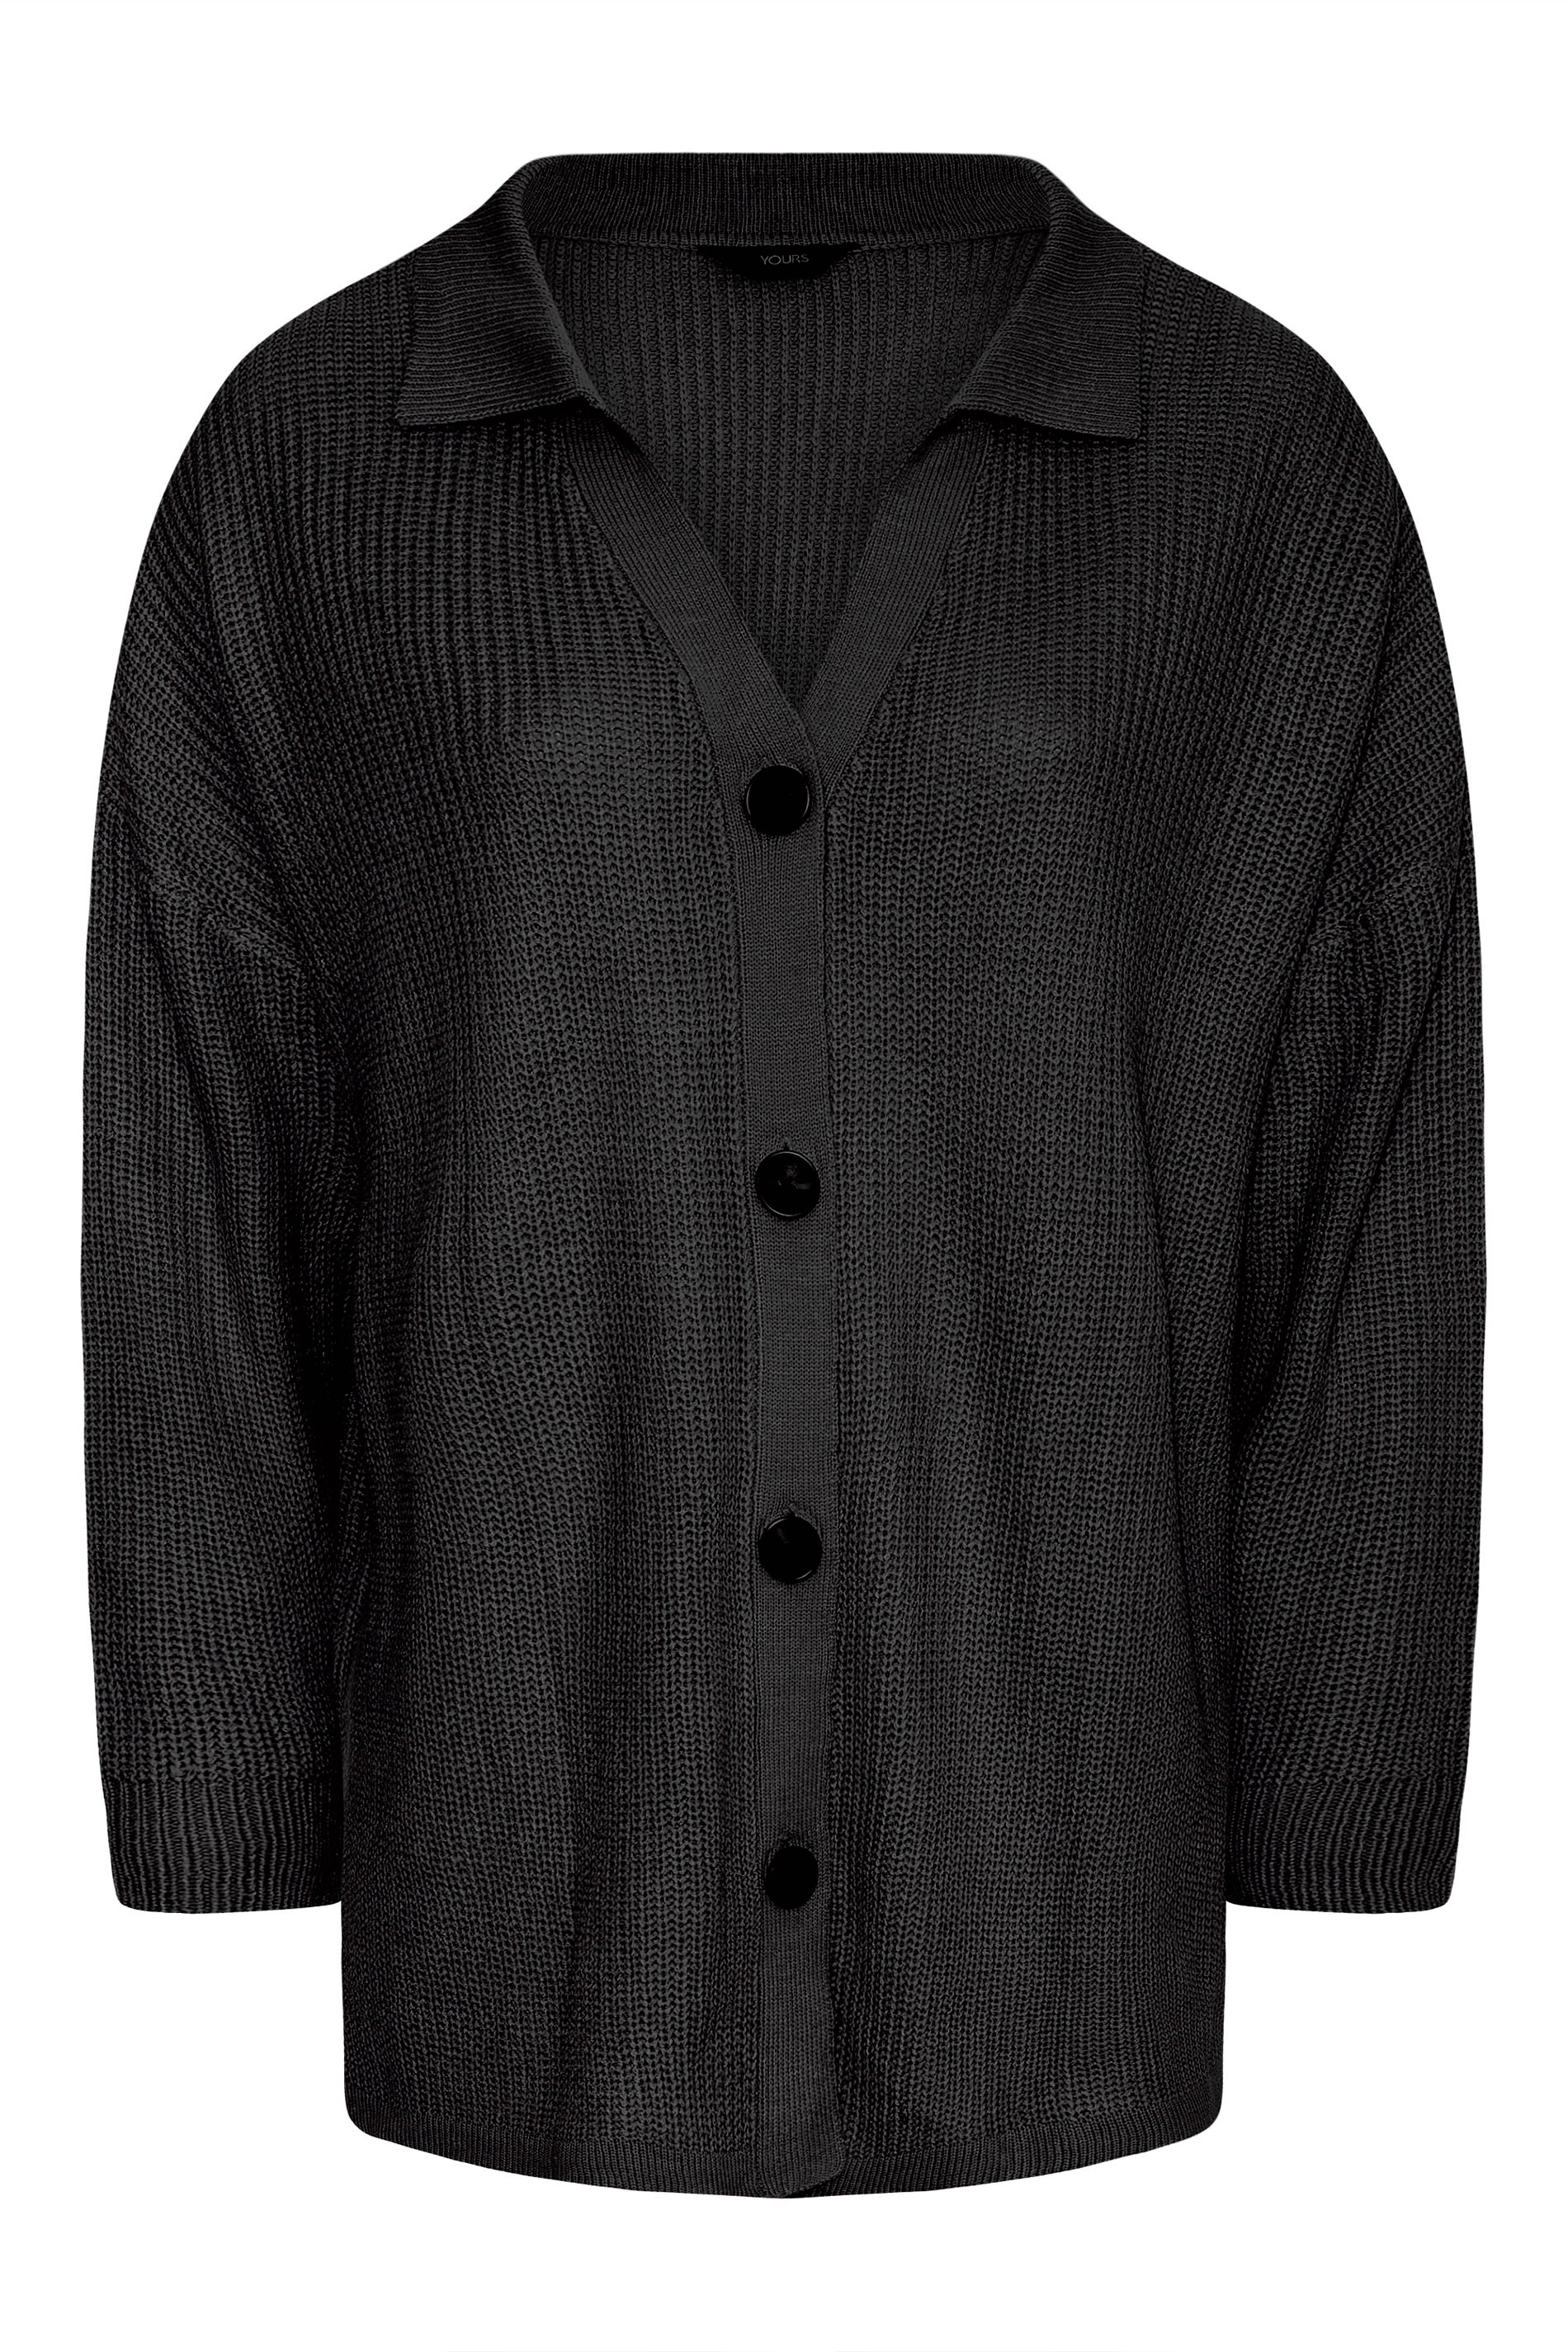 Curve Black Knitted Collar Cardigan_X.jpg